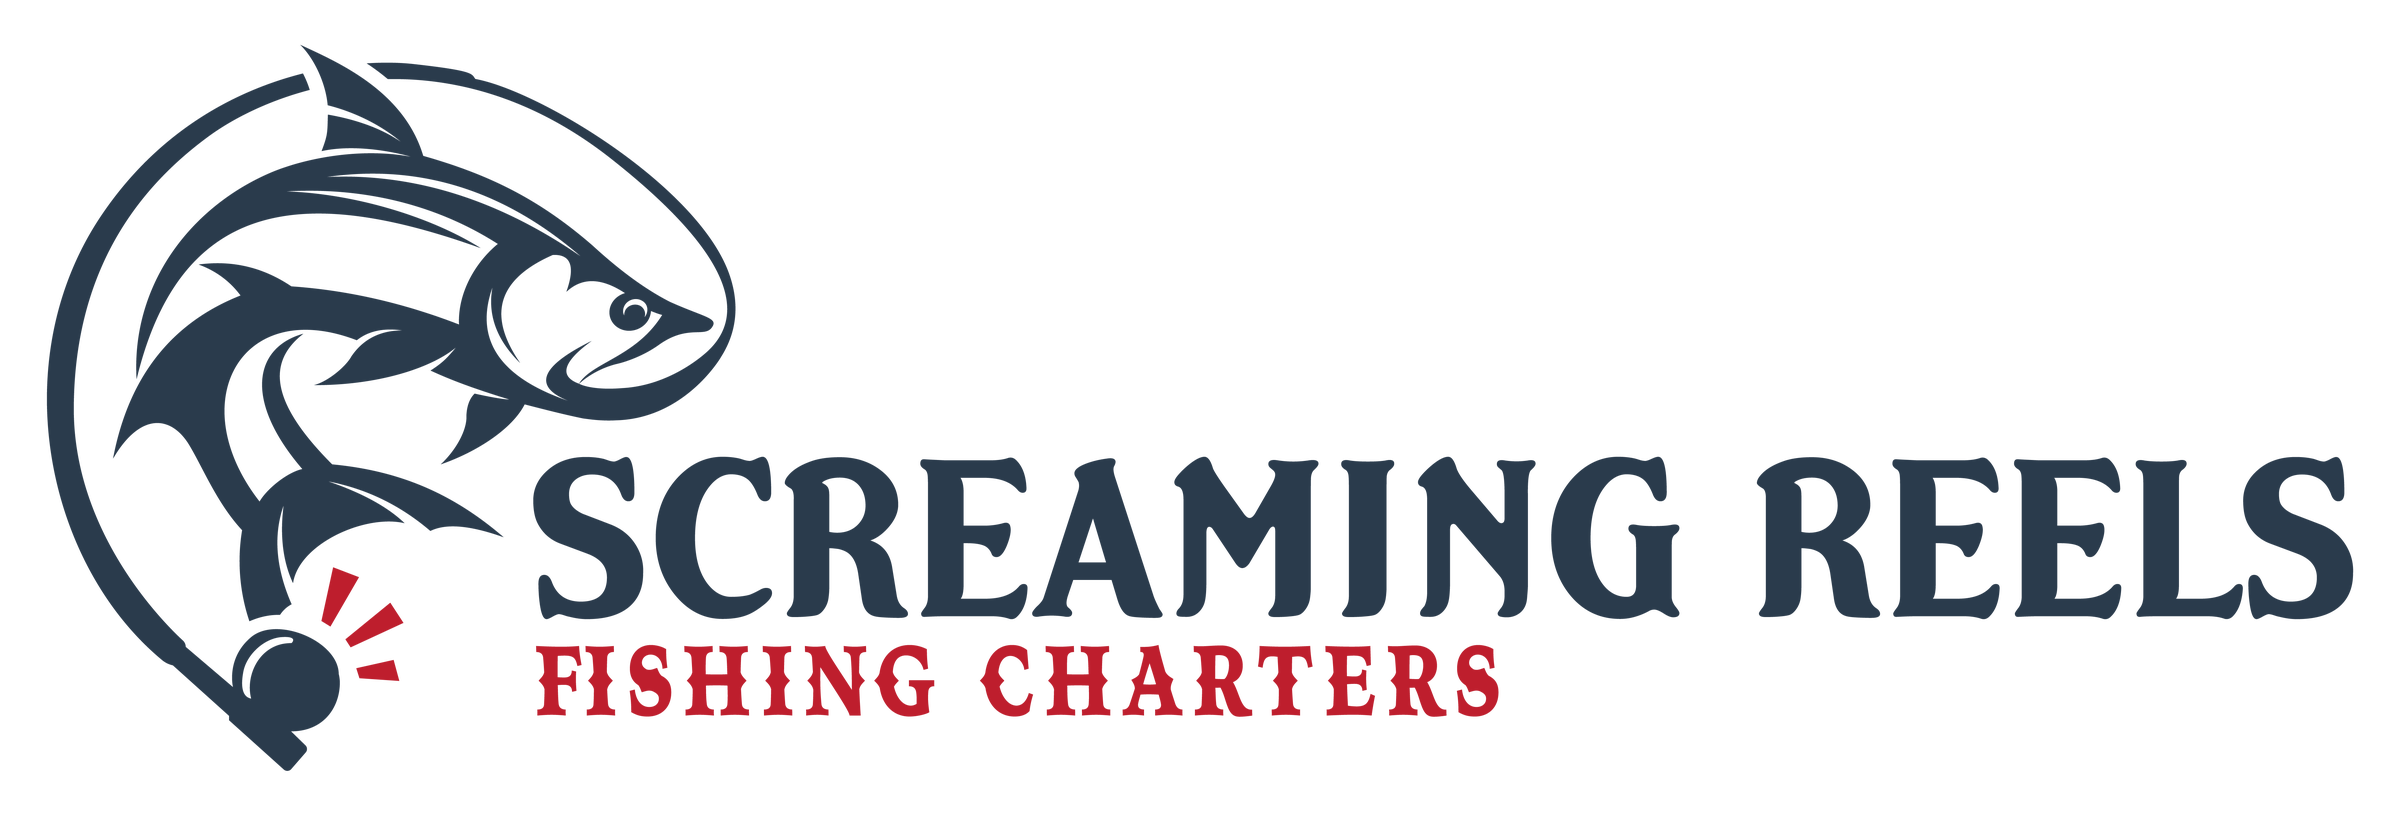 Home  Screaming Reels Fishing Charters